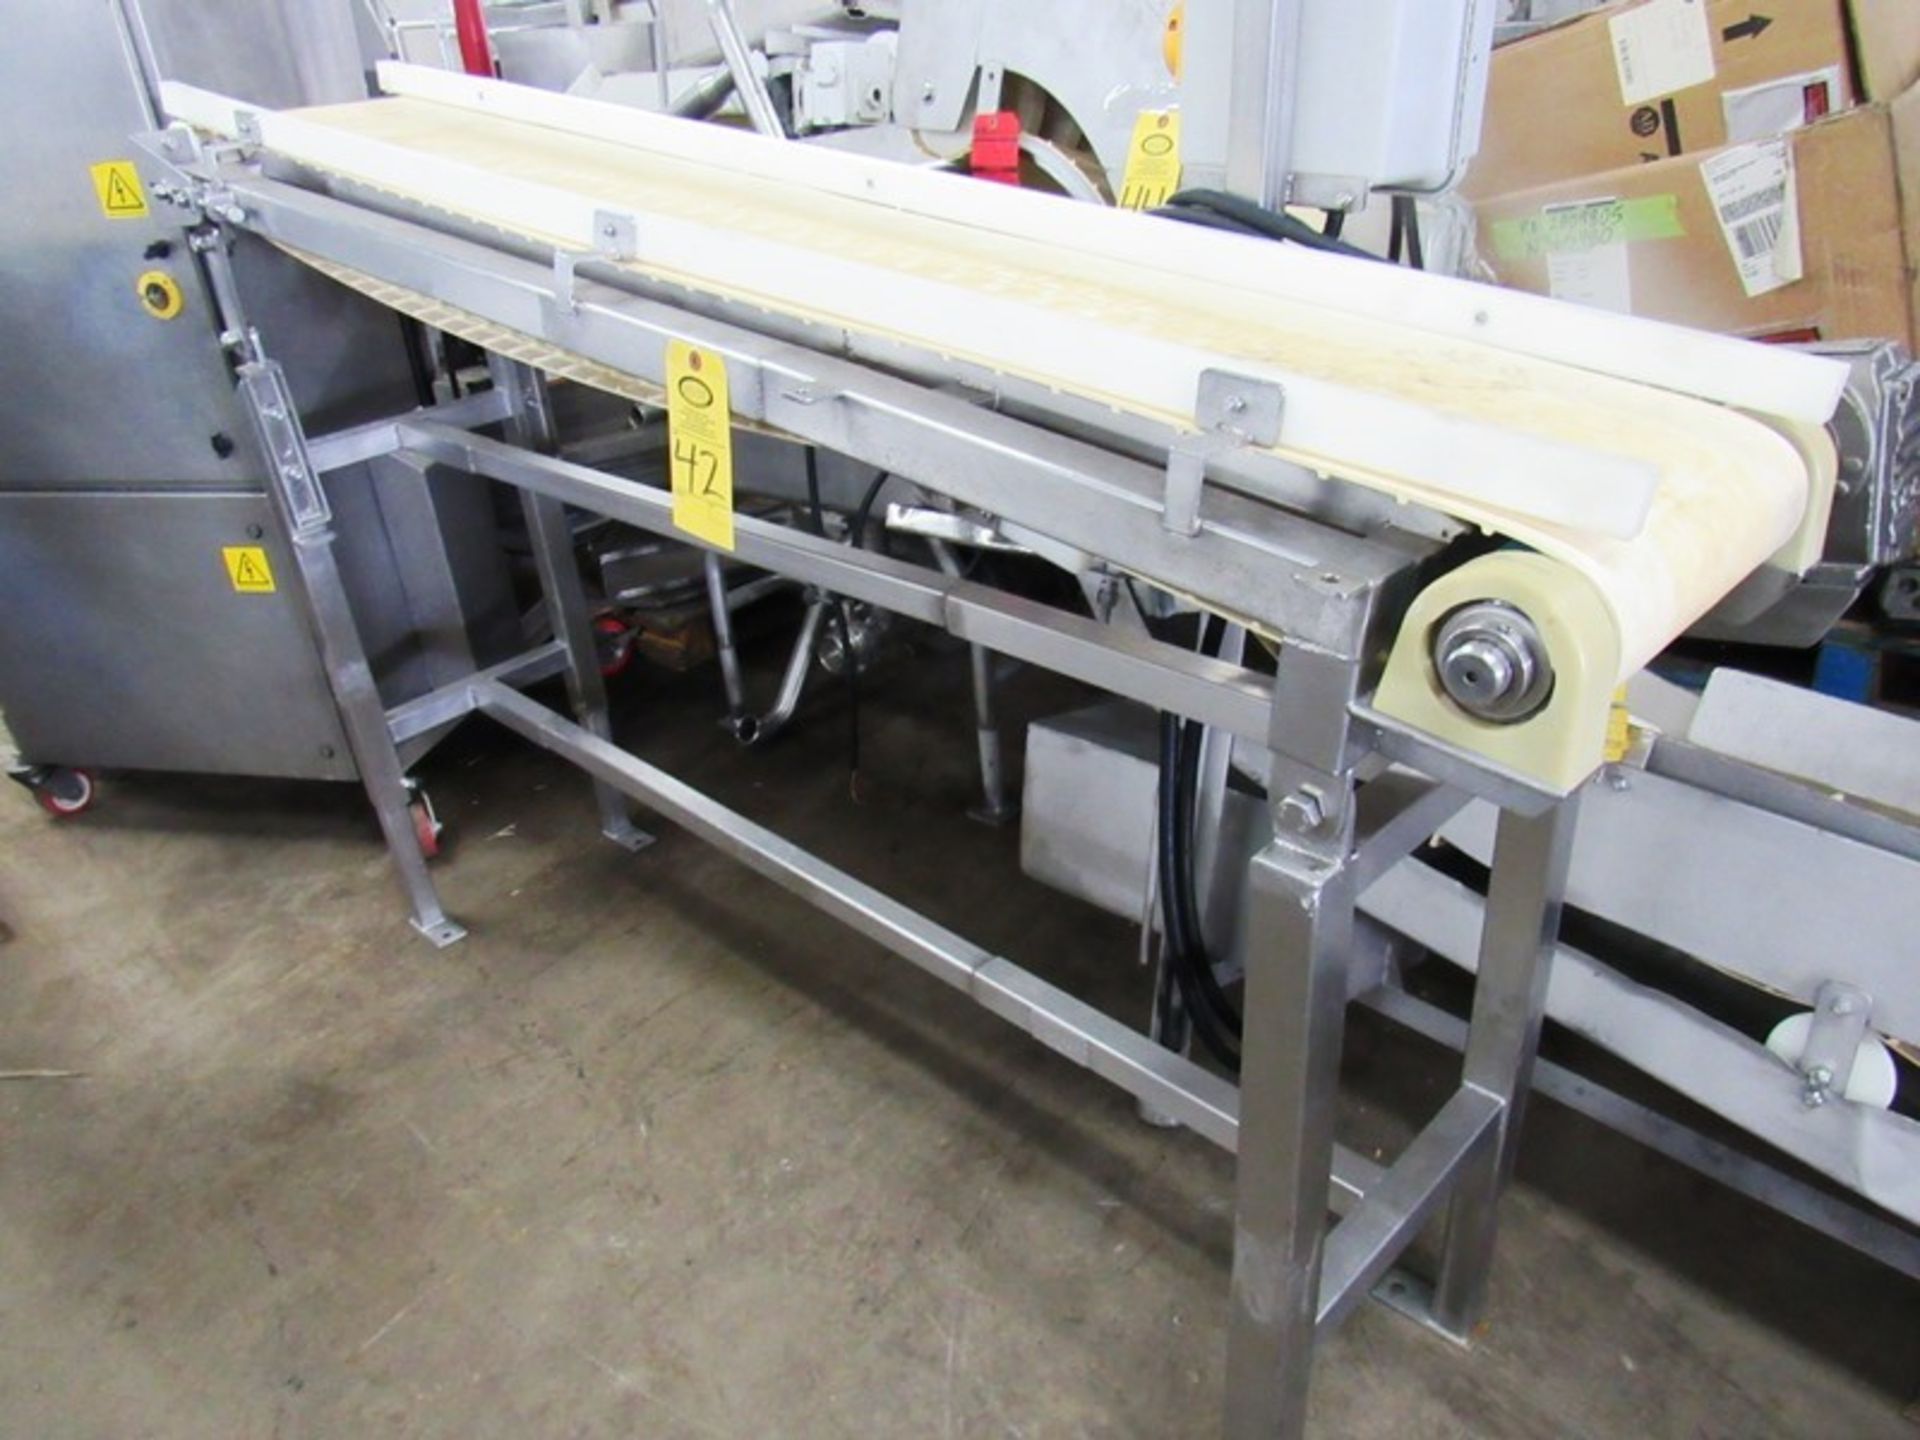 Stainless Steel Conveyor, 12" W X 6' L neoprene belt, adjustable incline to flat, 230/460 volt